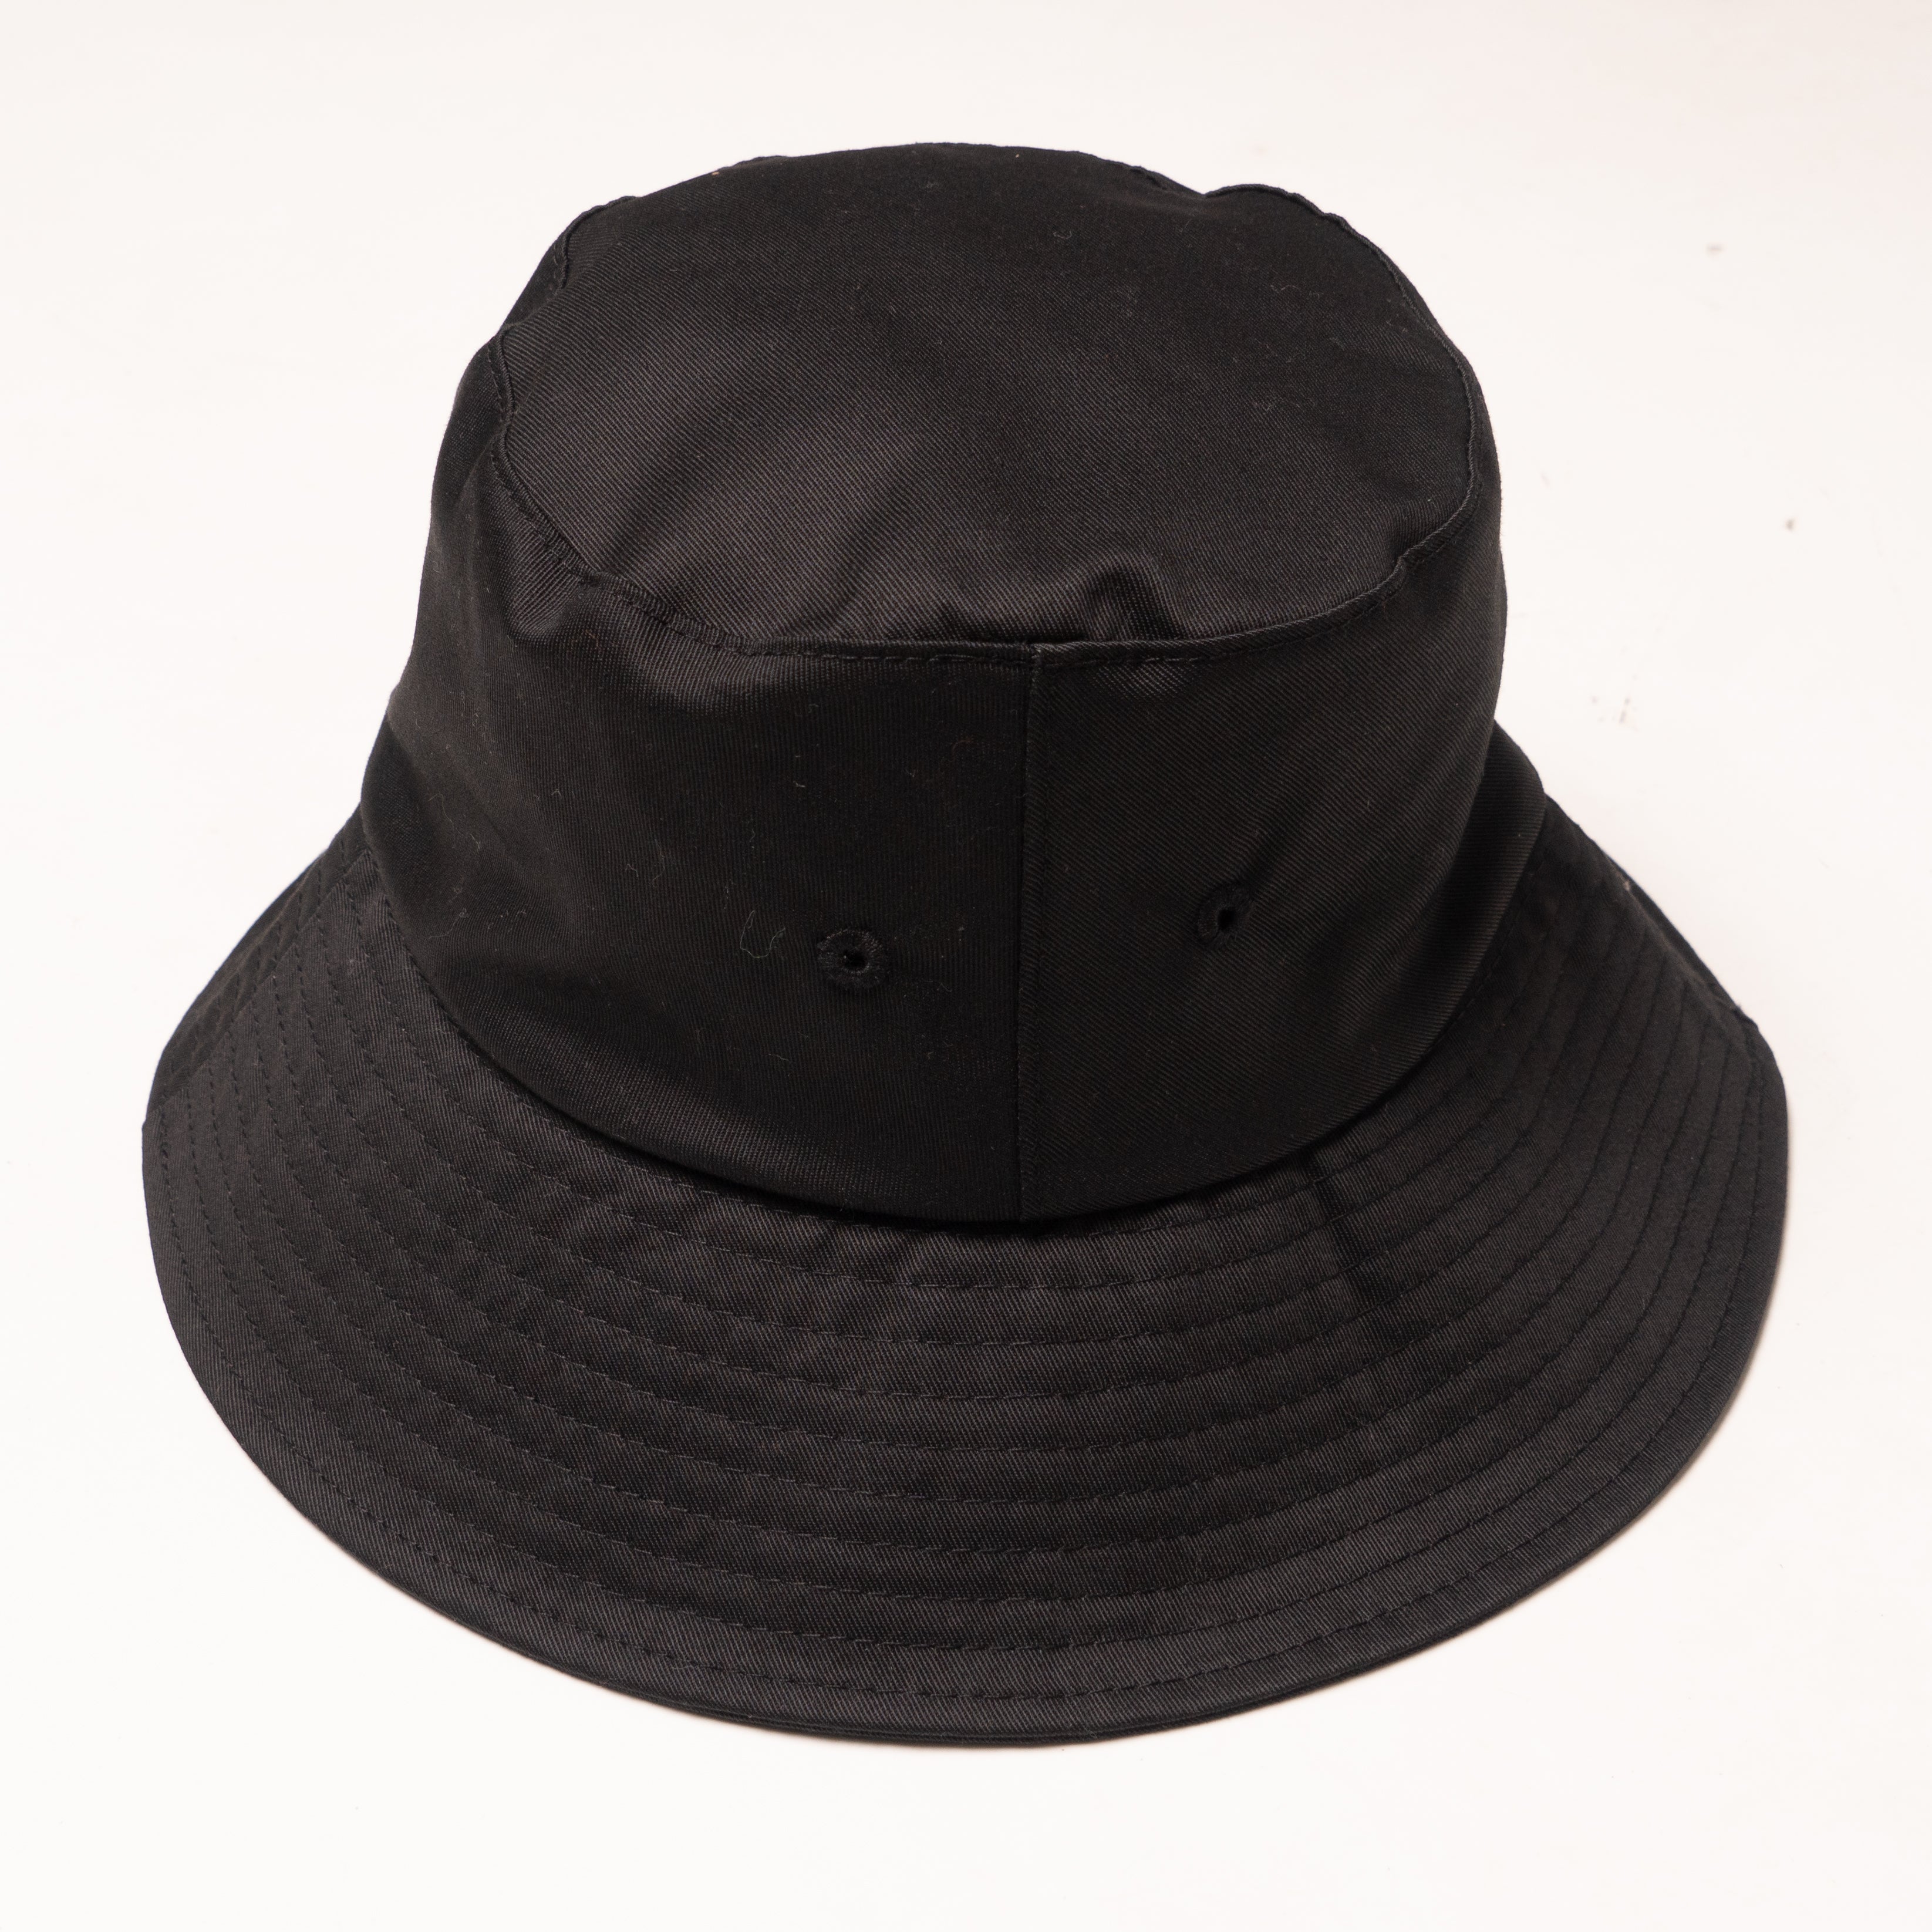 M002 Makobi Bucket Hat - Black